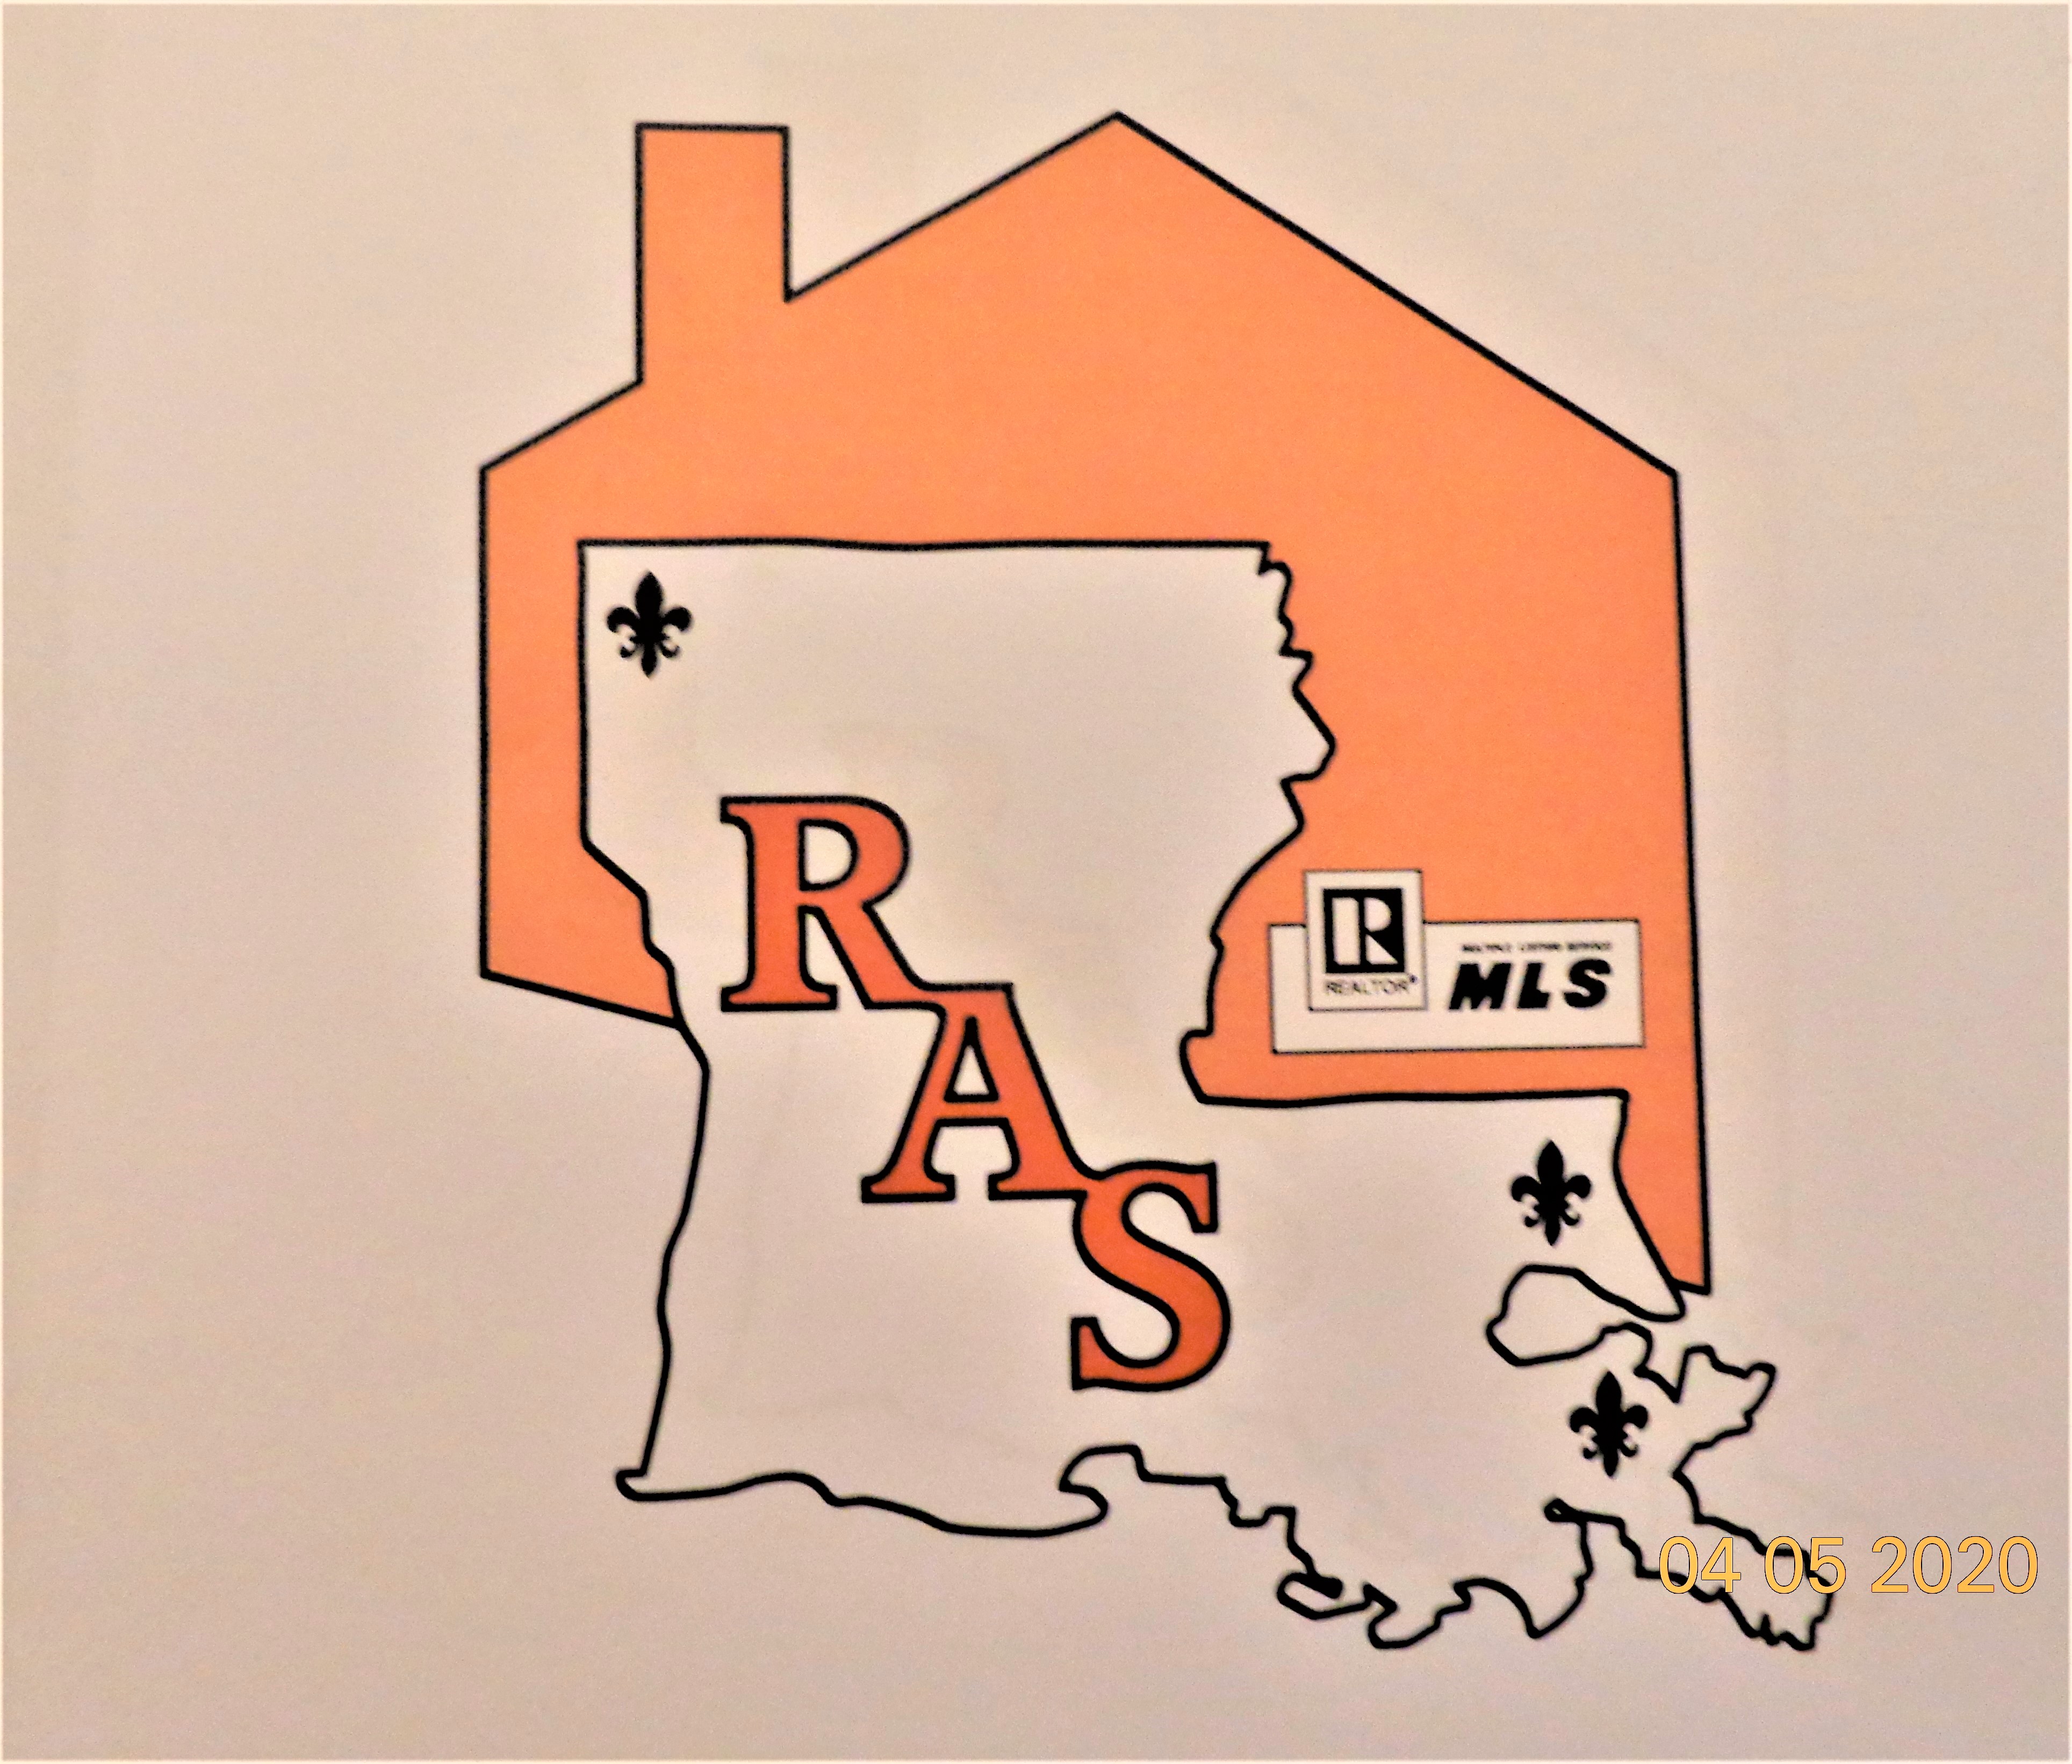 Richardson Appraisal Service of Louisiana Logo